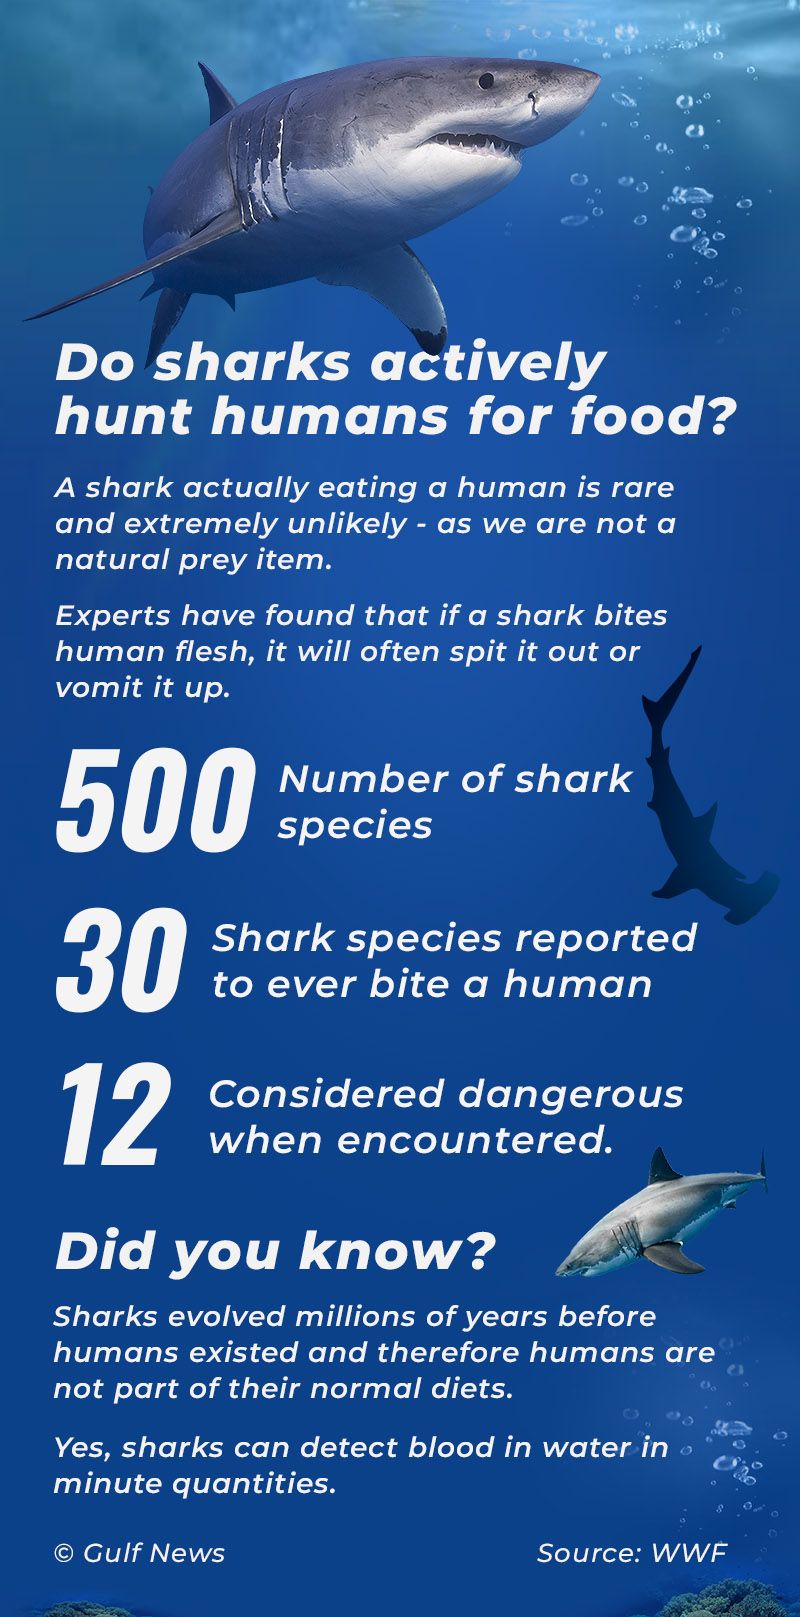 Sharks actively hunt humans for food